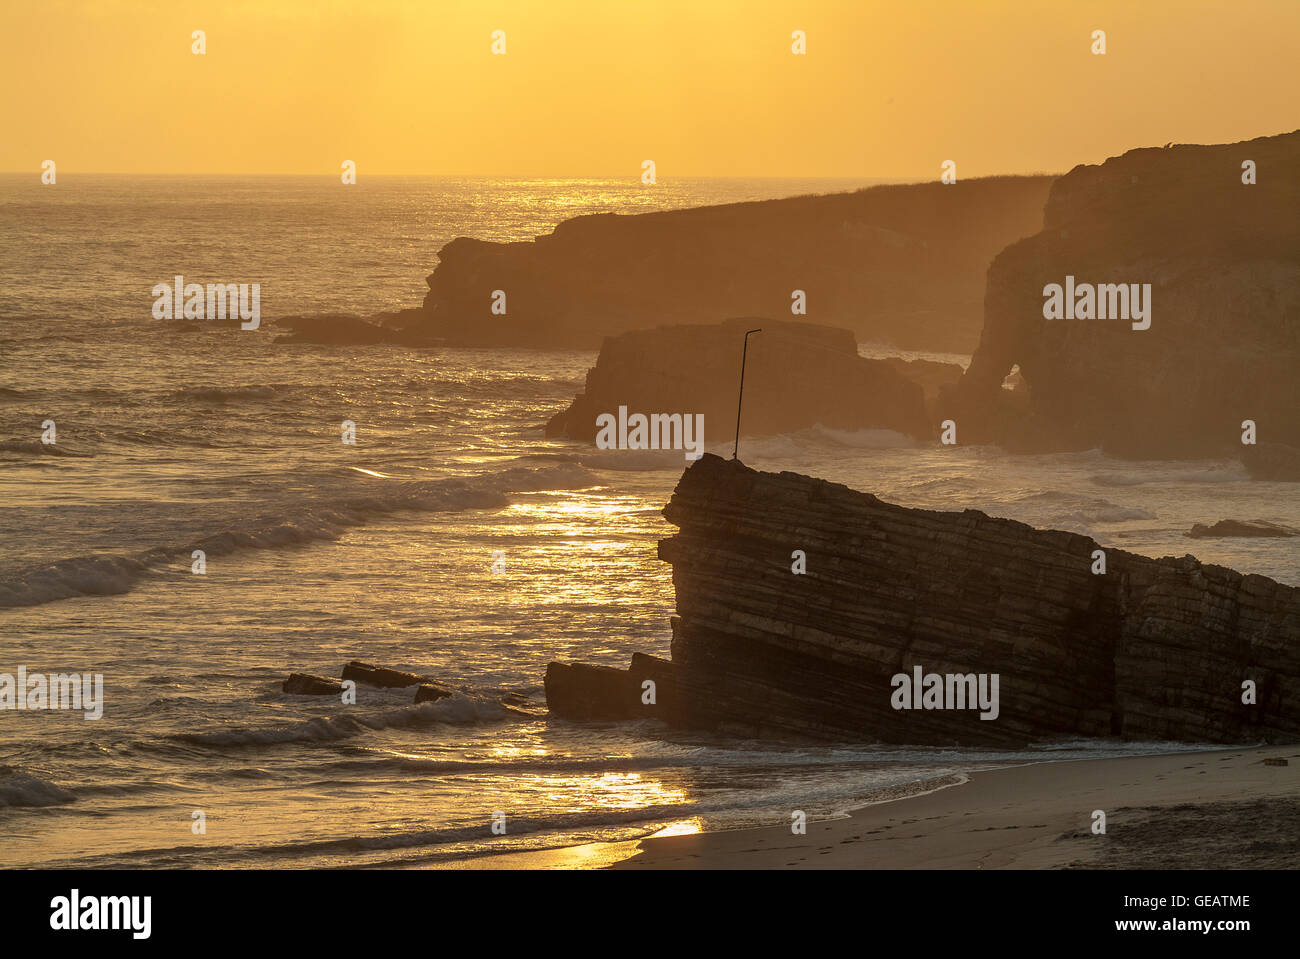 Spain, Calicia, Lugo, Cantabrian Sea, morning mood at the beach Praia de Longara Stock Photo